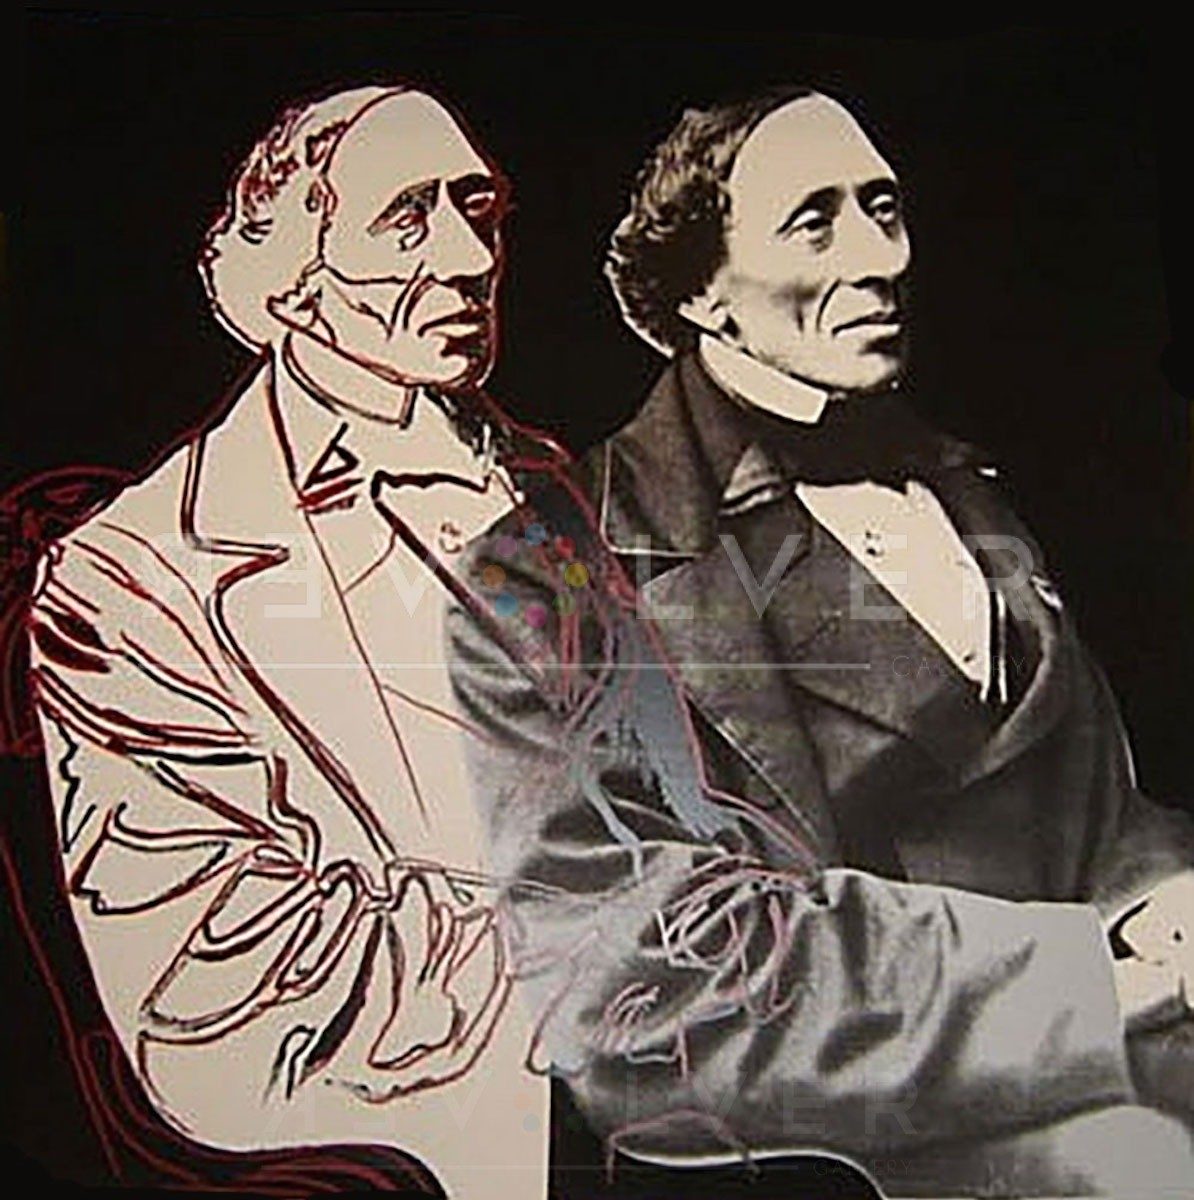 Andy Warhol's Hans Christian Andersen 394 screenprint